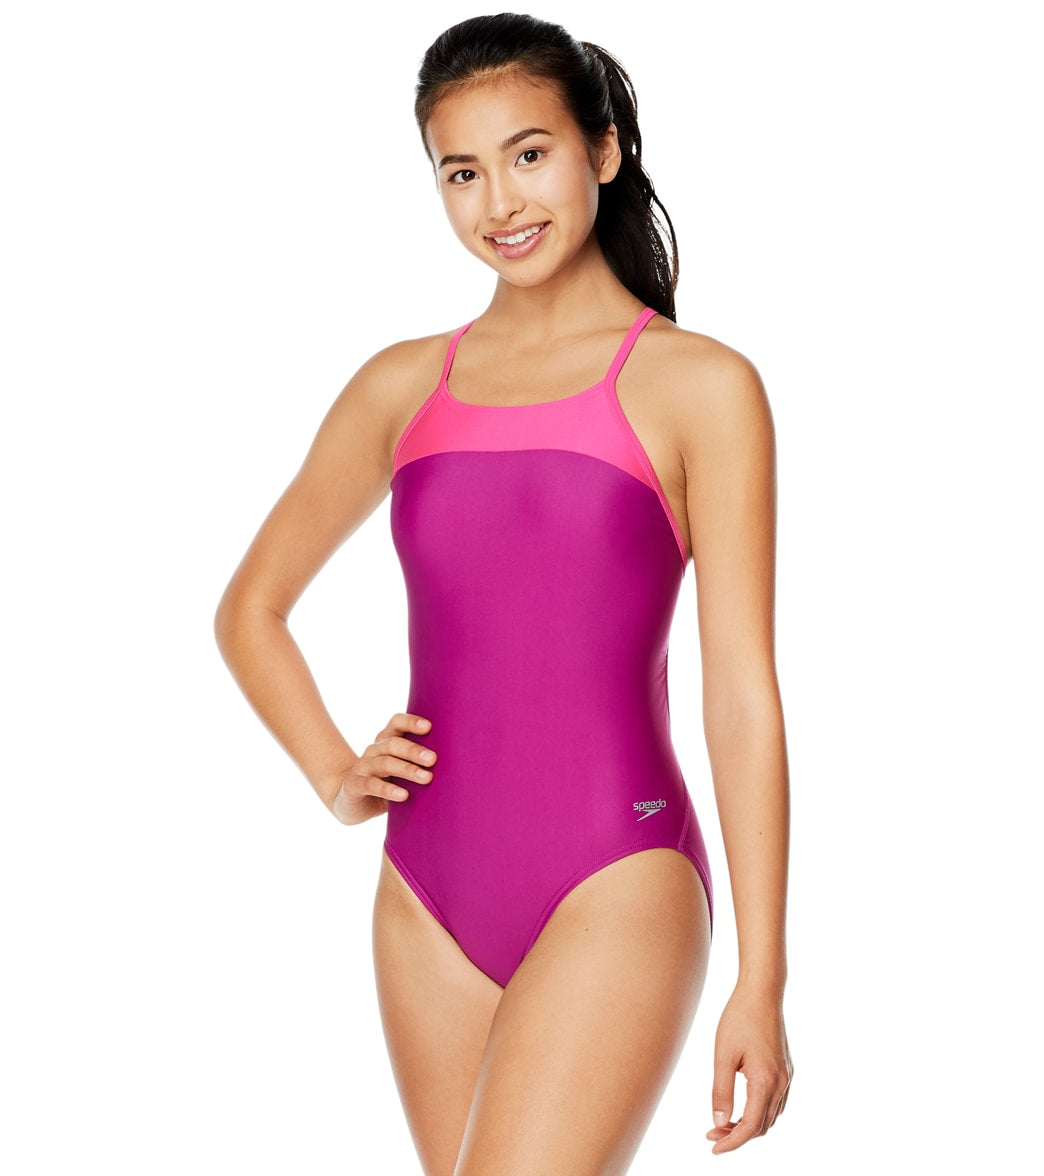 Speedo Women's Color Blocked Flyer One Piece Swimsuit at SwimOutlet.com